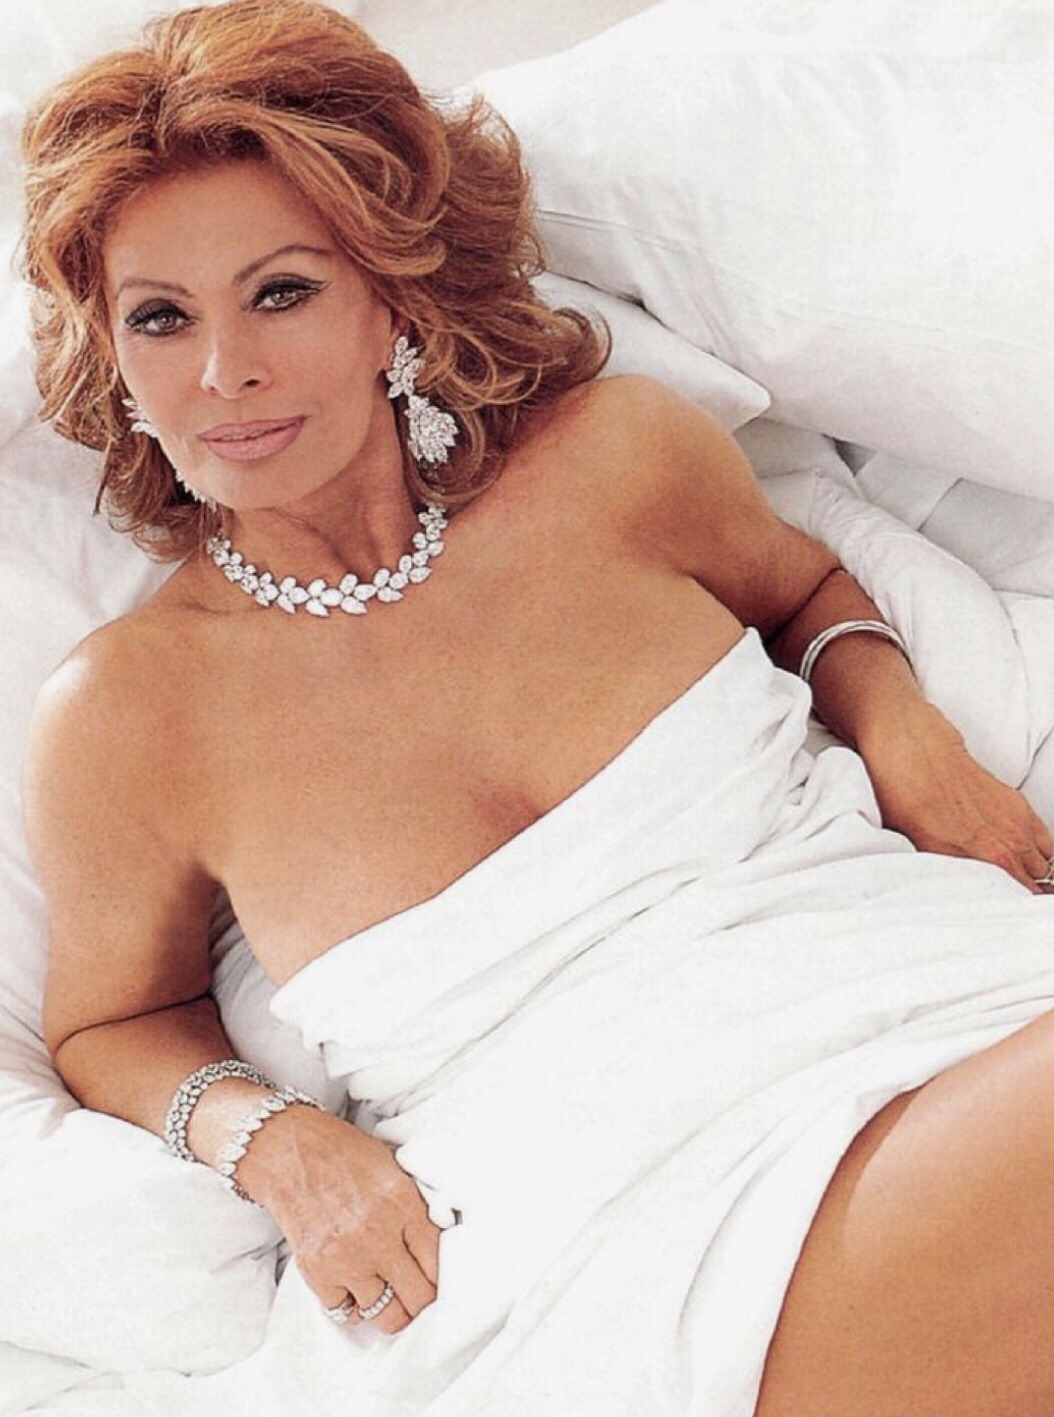 shane-anator:boyskeepswinging1:Sophia Loren in her mature younger days 🤍❤️‍🩹🤍💕💓👌🔝👌Beautiful 